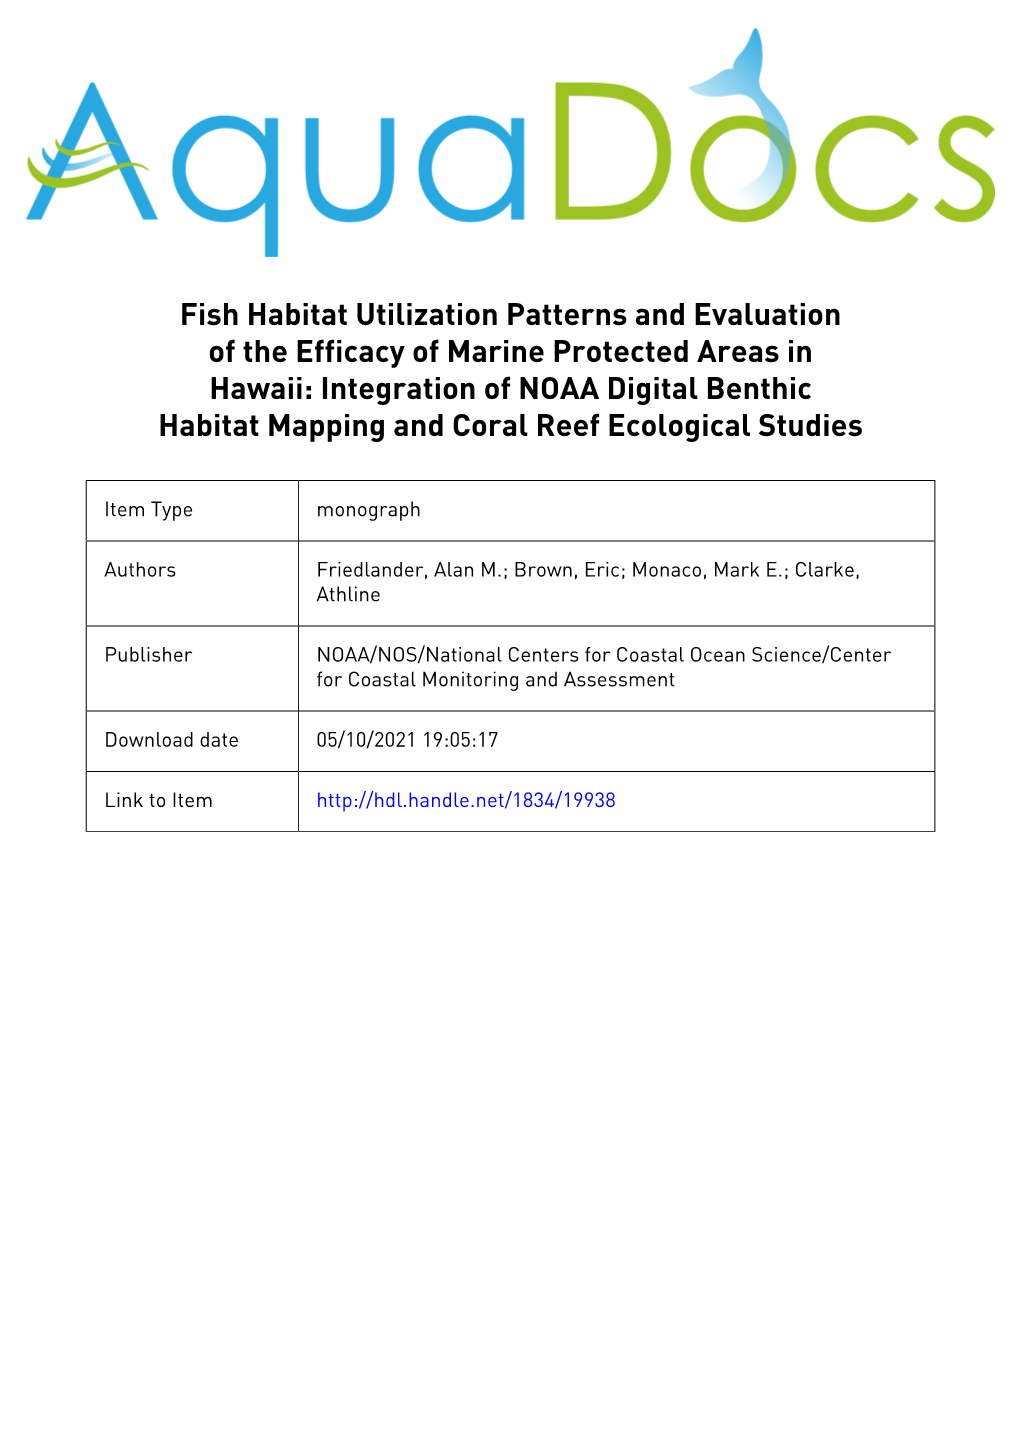 Fish Habitat Utilization Patterns and Evaluation Of